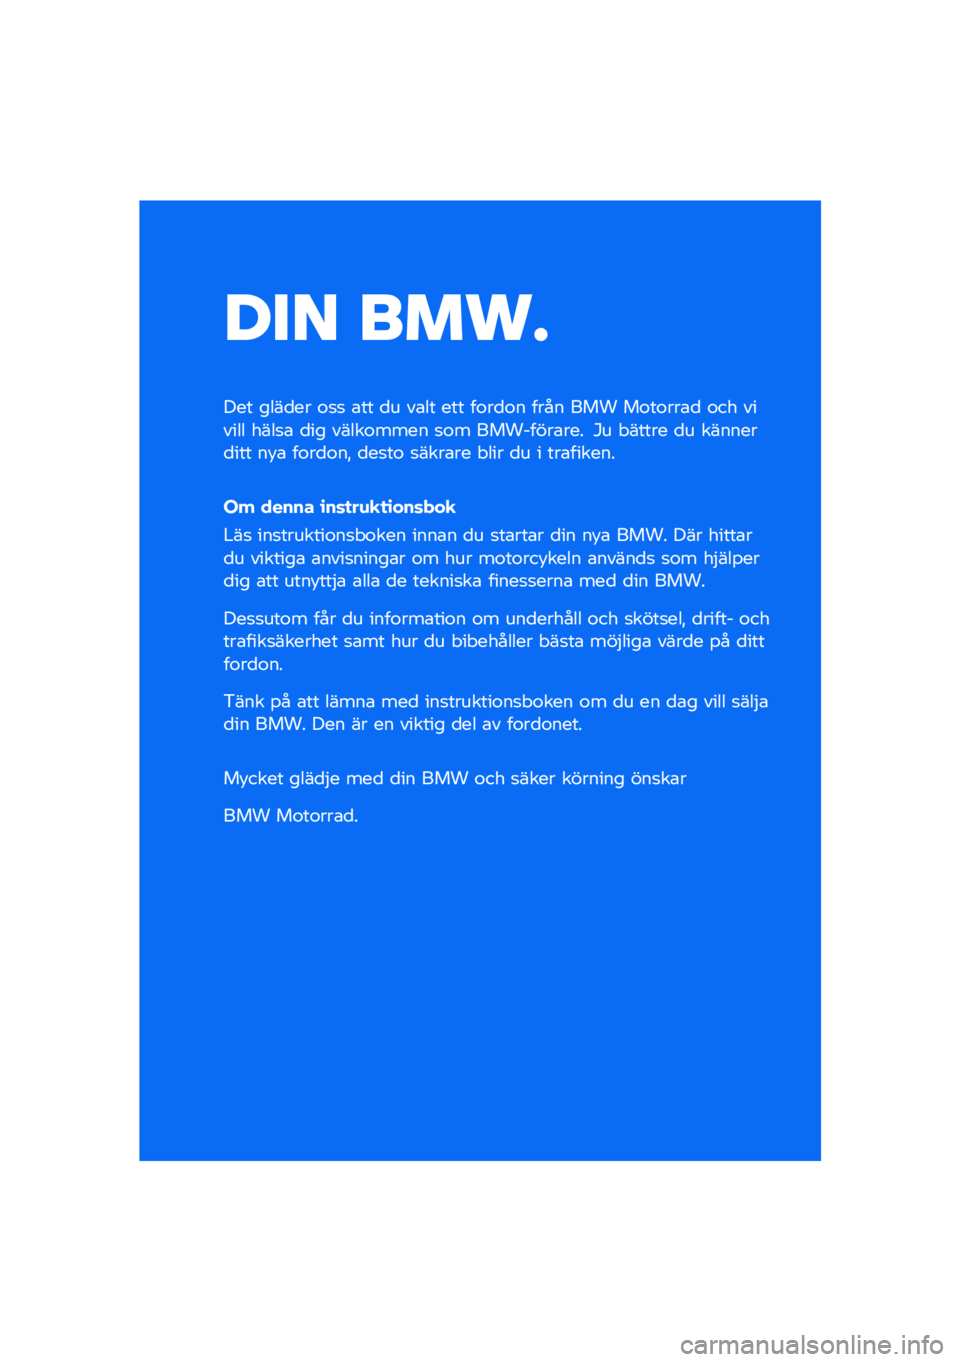 BMW MOTORRAD F 900 R 2021  Instruktionsbok (in Swedish) ��� ����\b
��� ����
�� �\f�
�
 �\b�� �
� ��\b�� ��� ��\f��
�\f� ���� ��� ��\f��\f���\b�
 �\f�� ������ ����
�\b �
�� �����\f���� �
�\f� ���